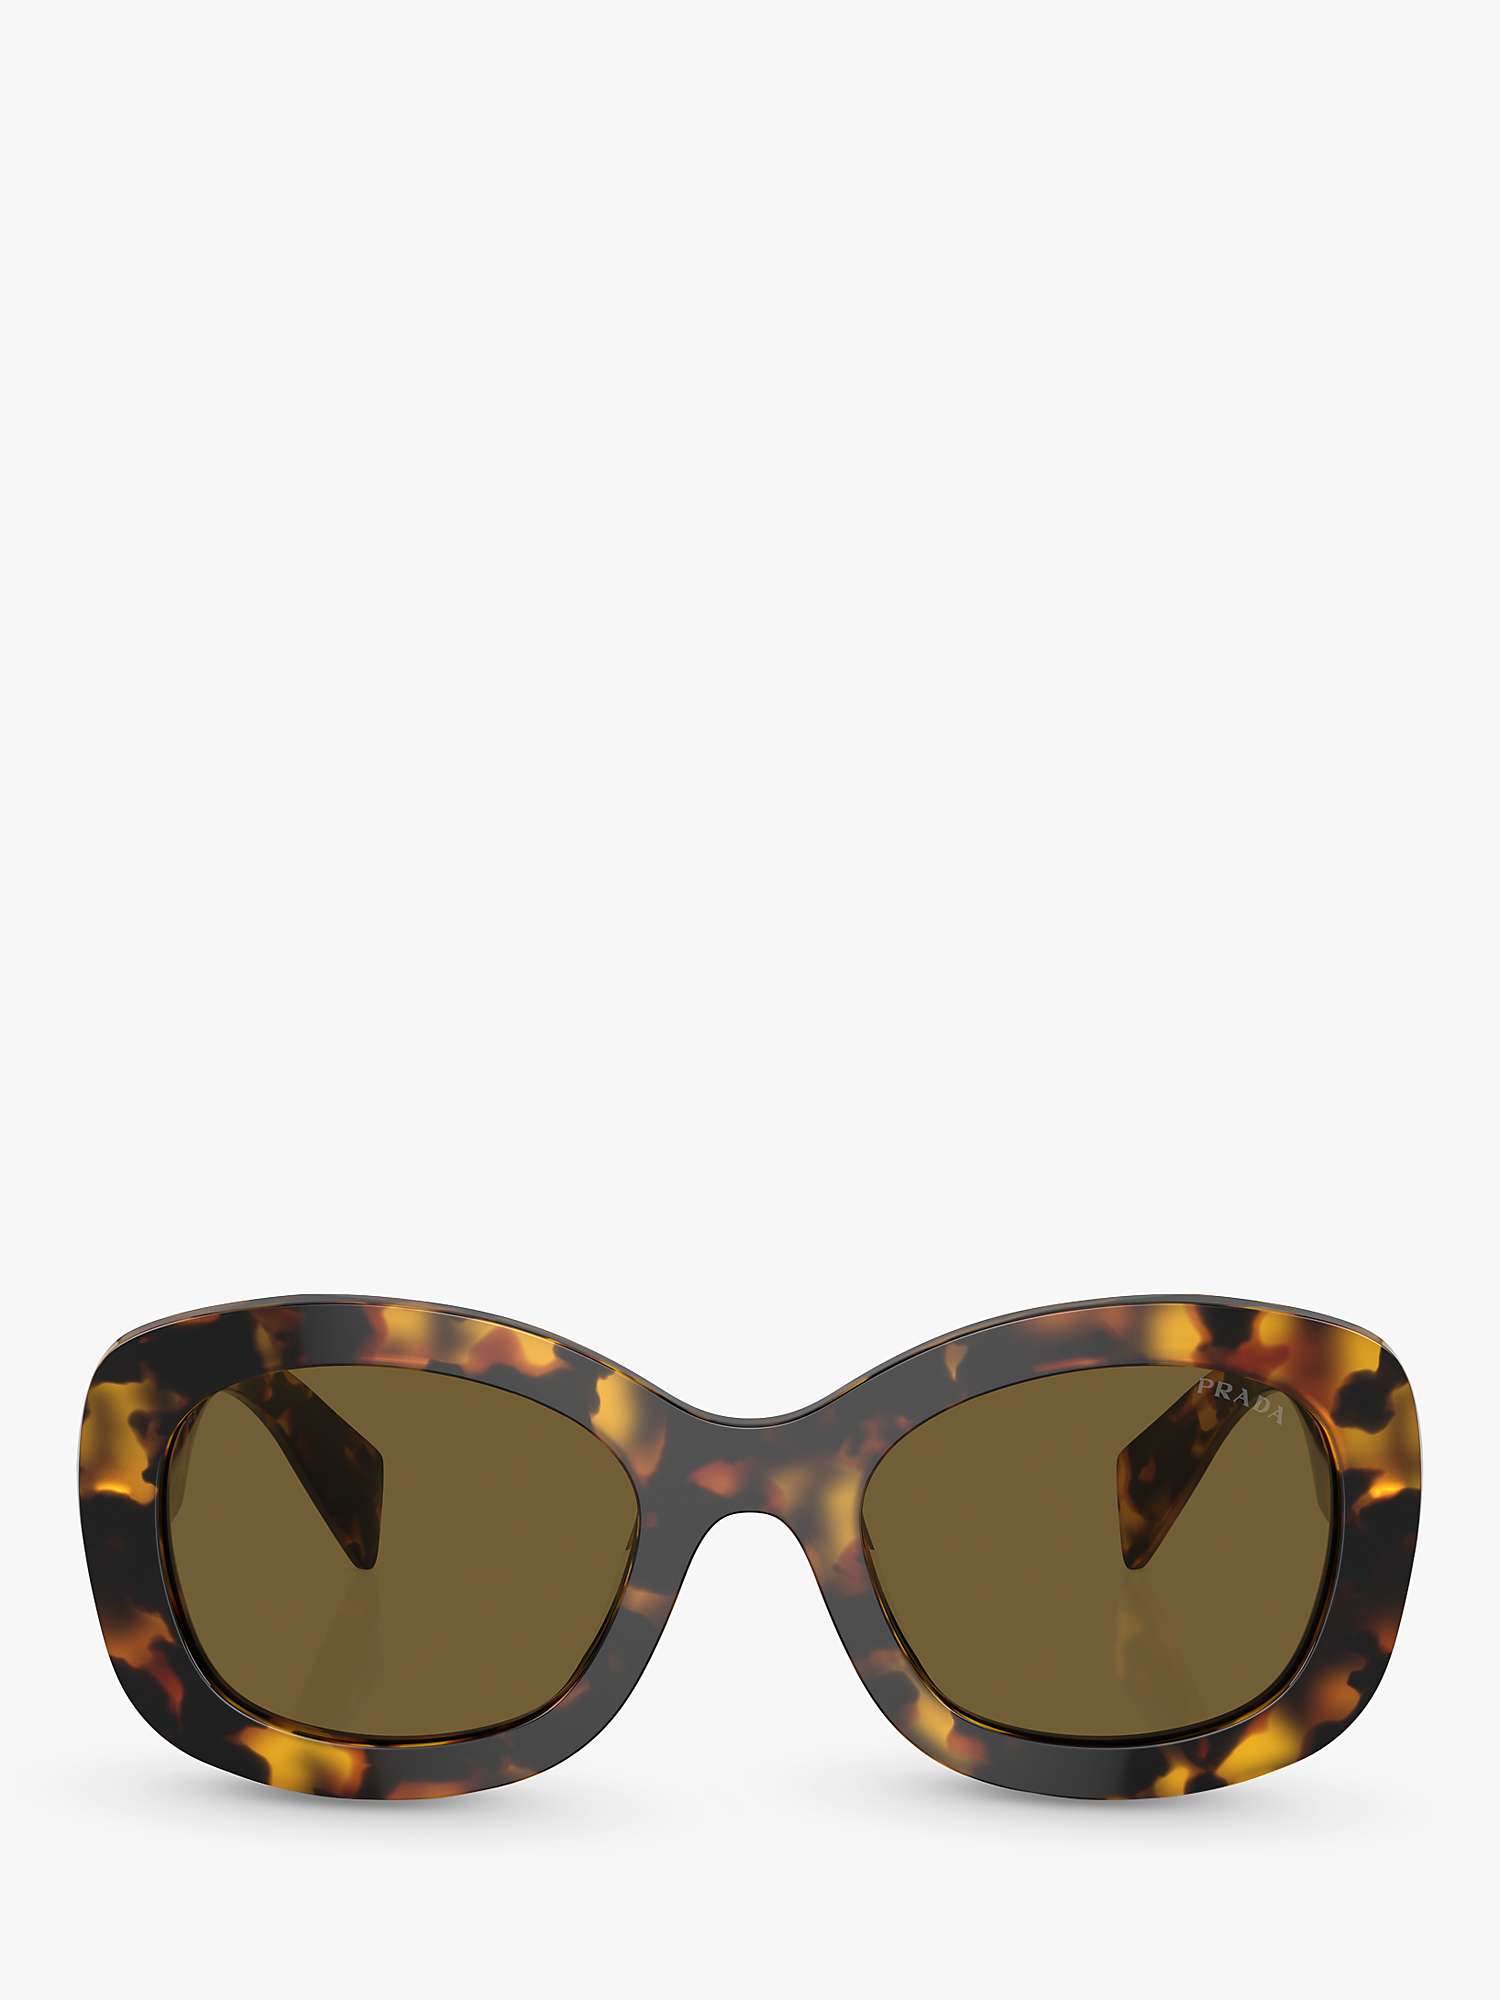 Buy Prada PR A13S Women's Round Sunglasses Online at johnlewis.com